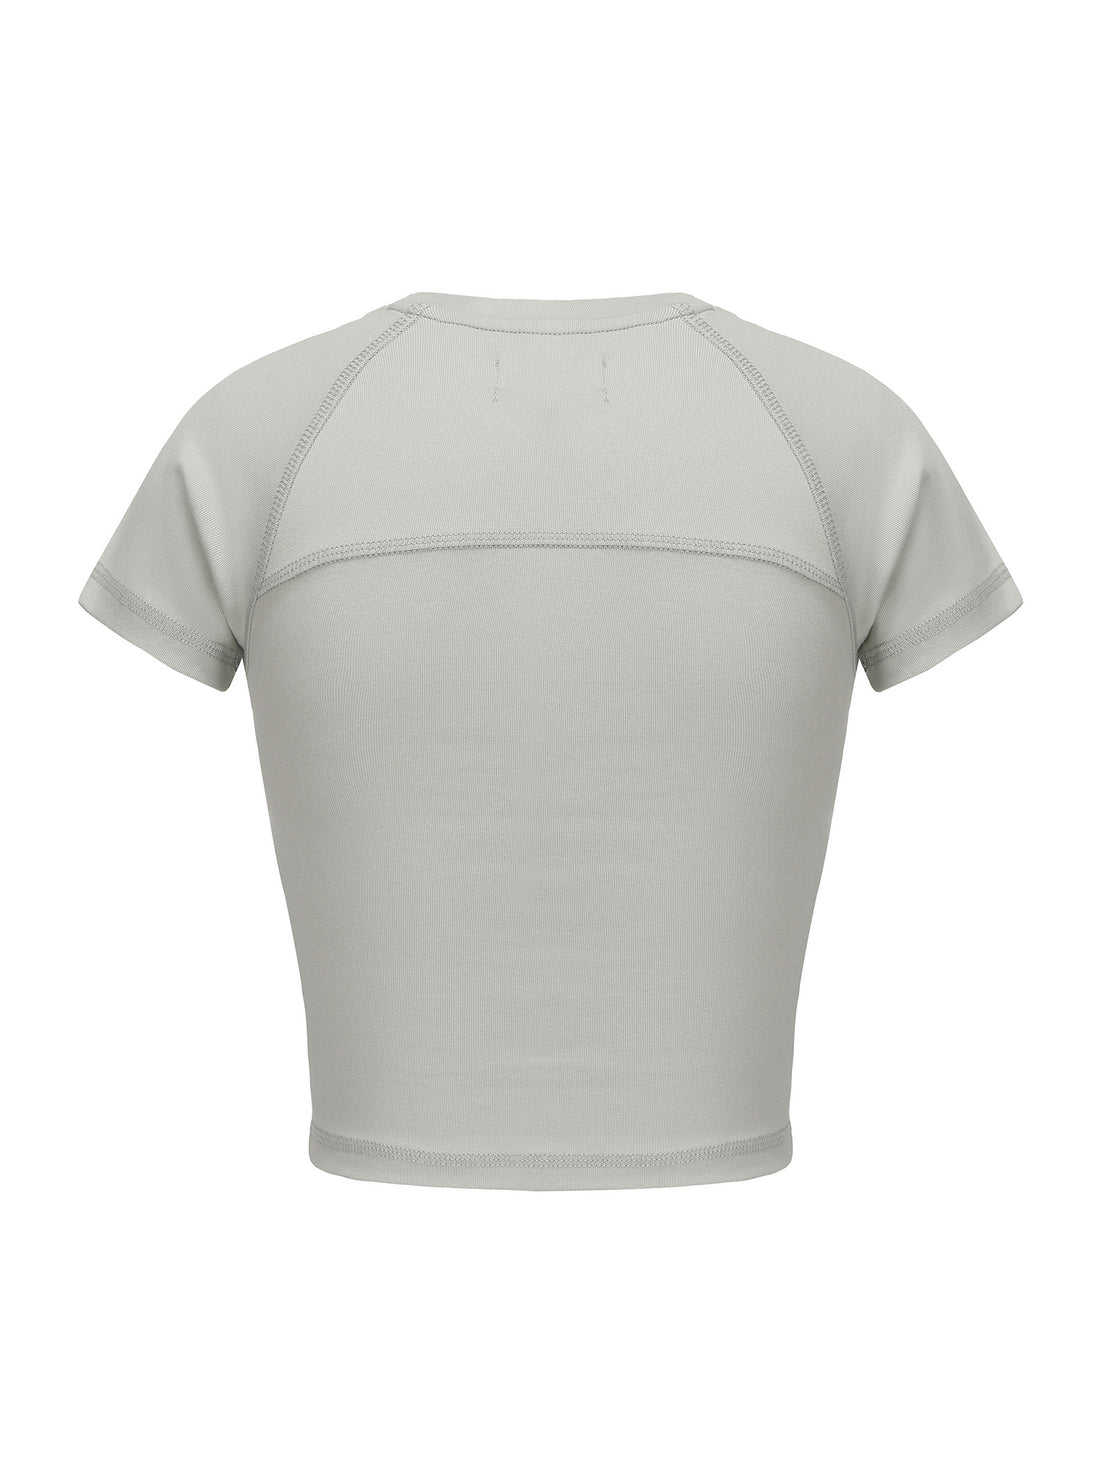 Raglan Waisted Short-sleeved Top